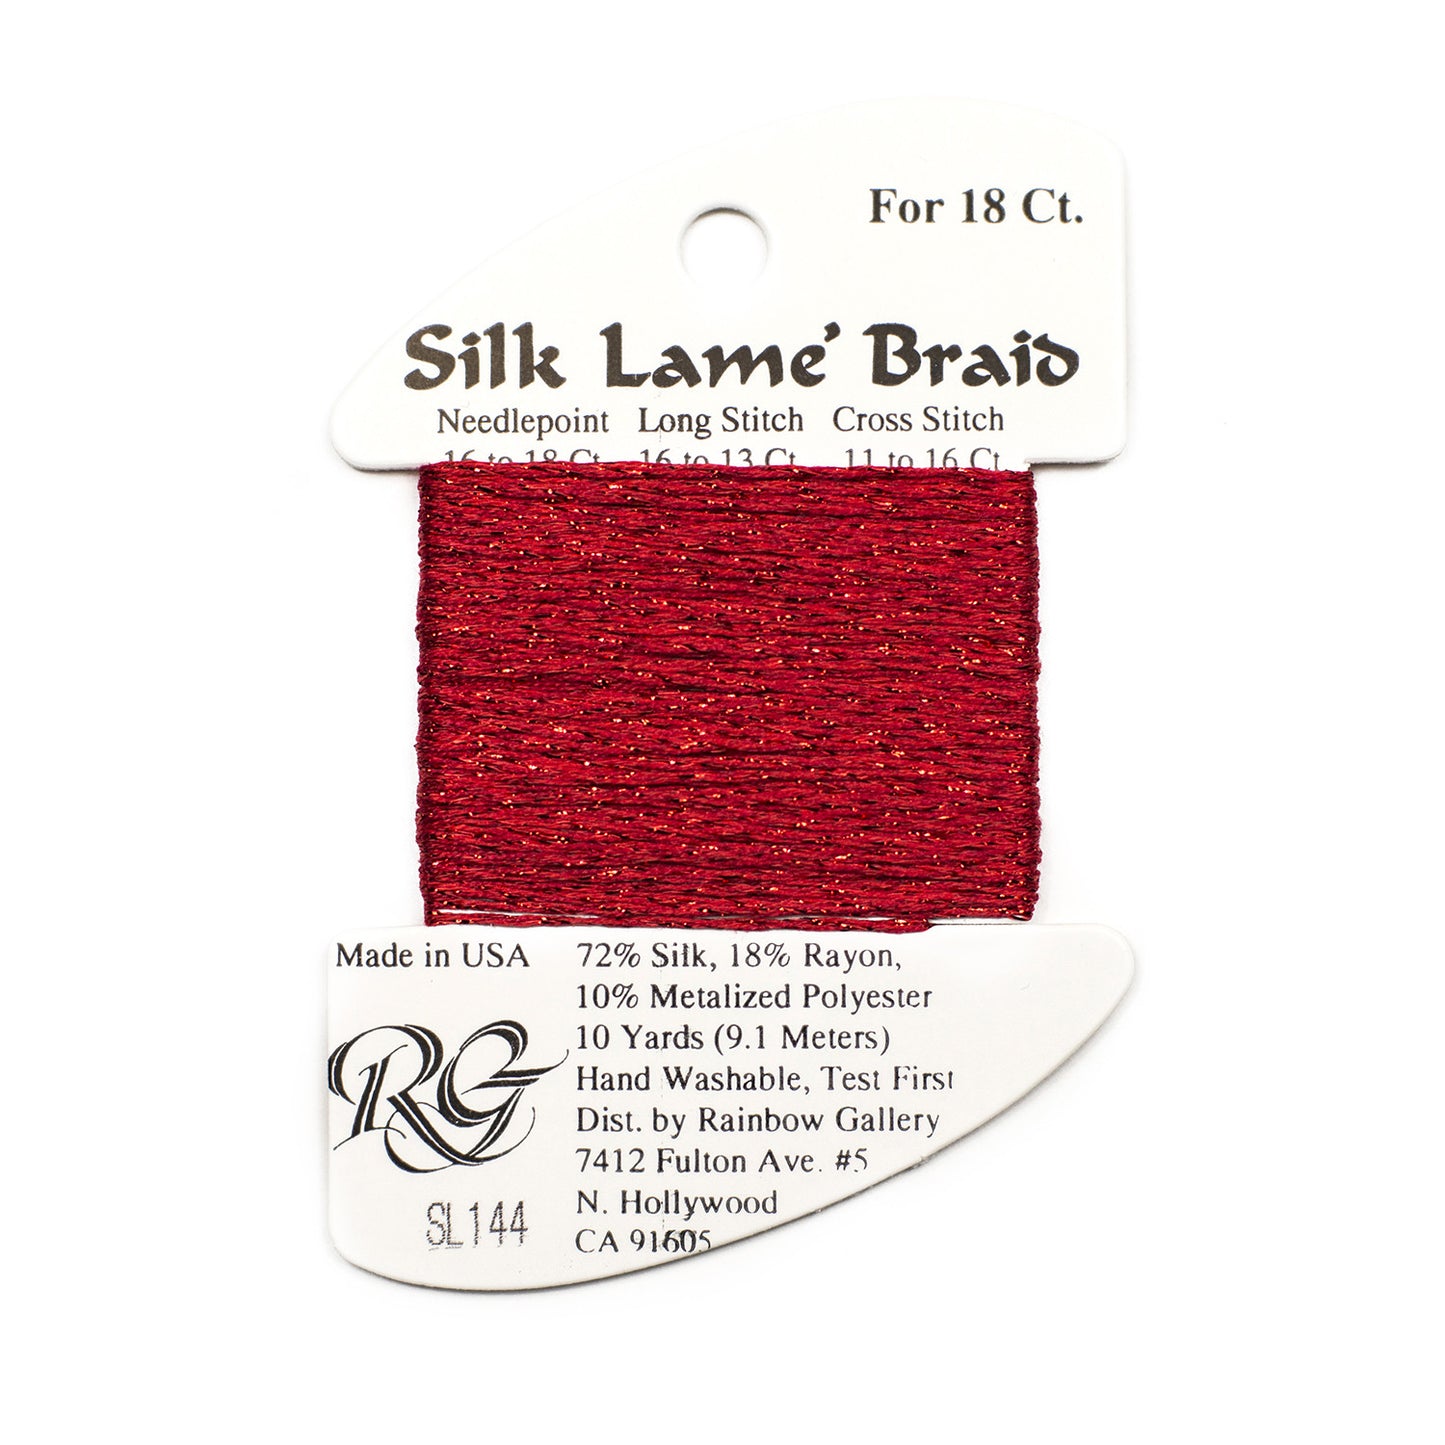 Petite Silk Lame Braid